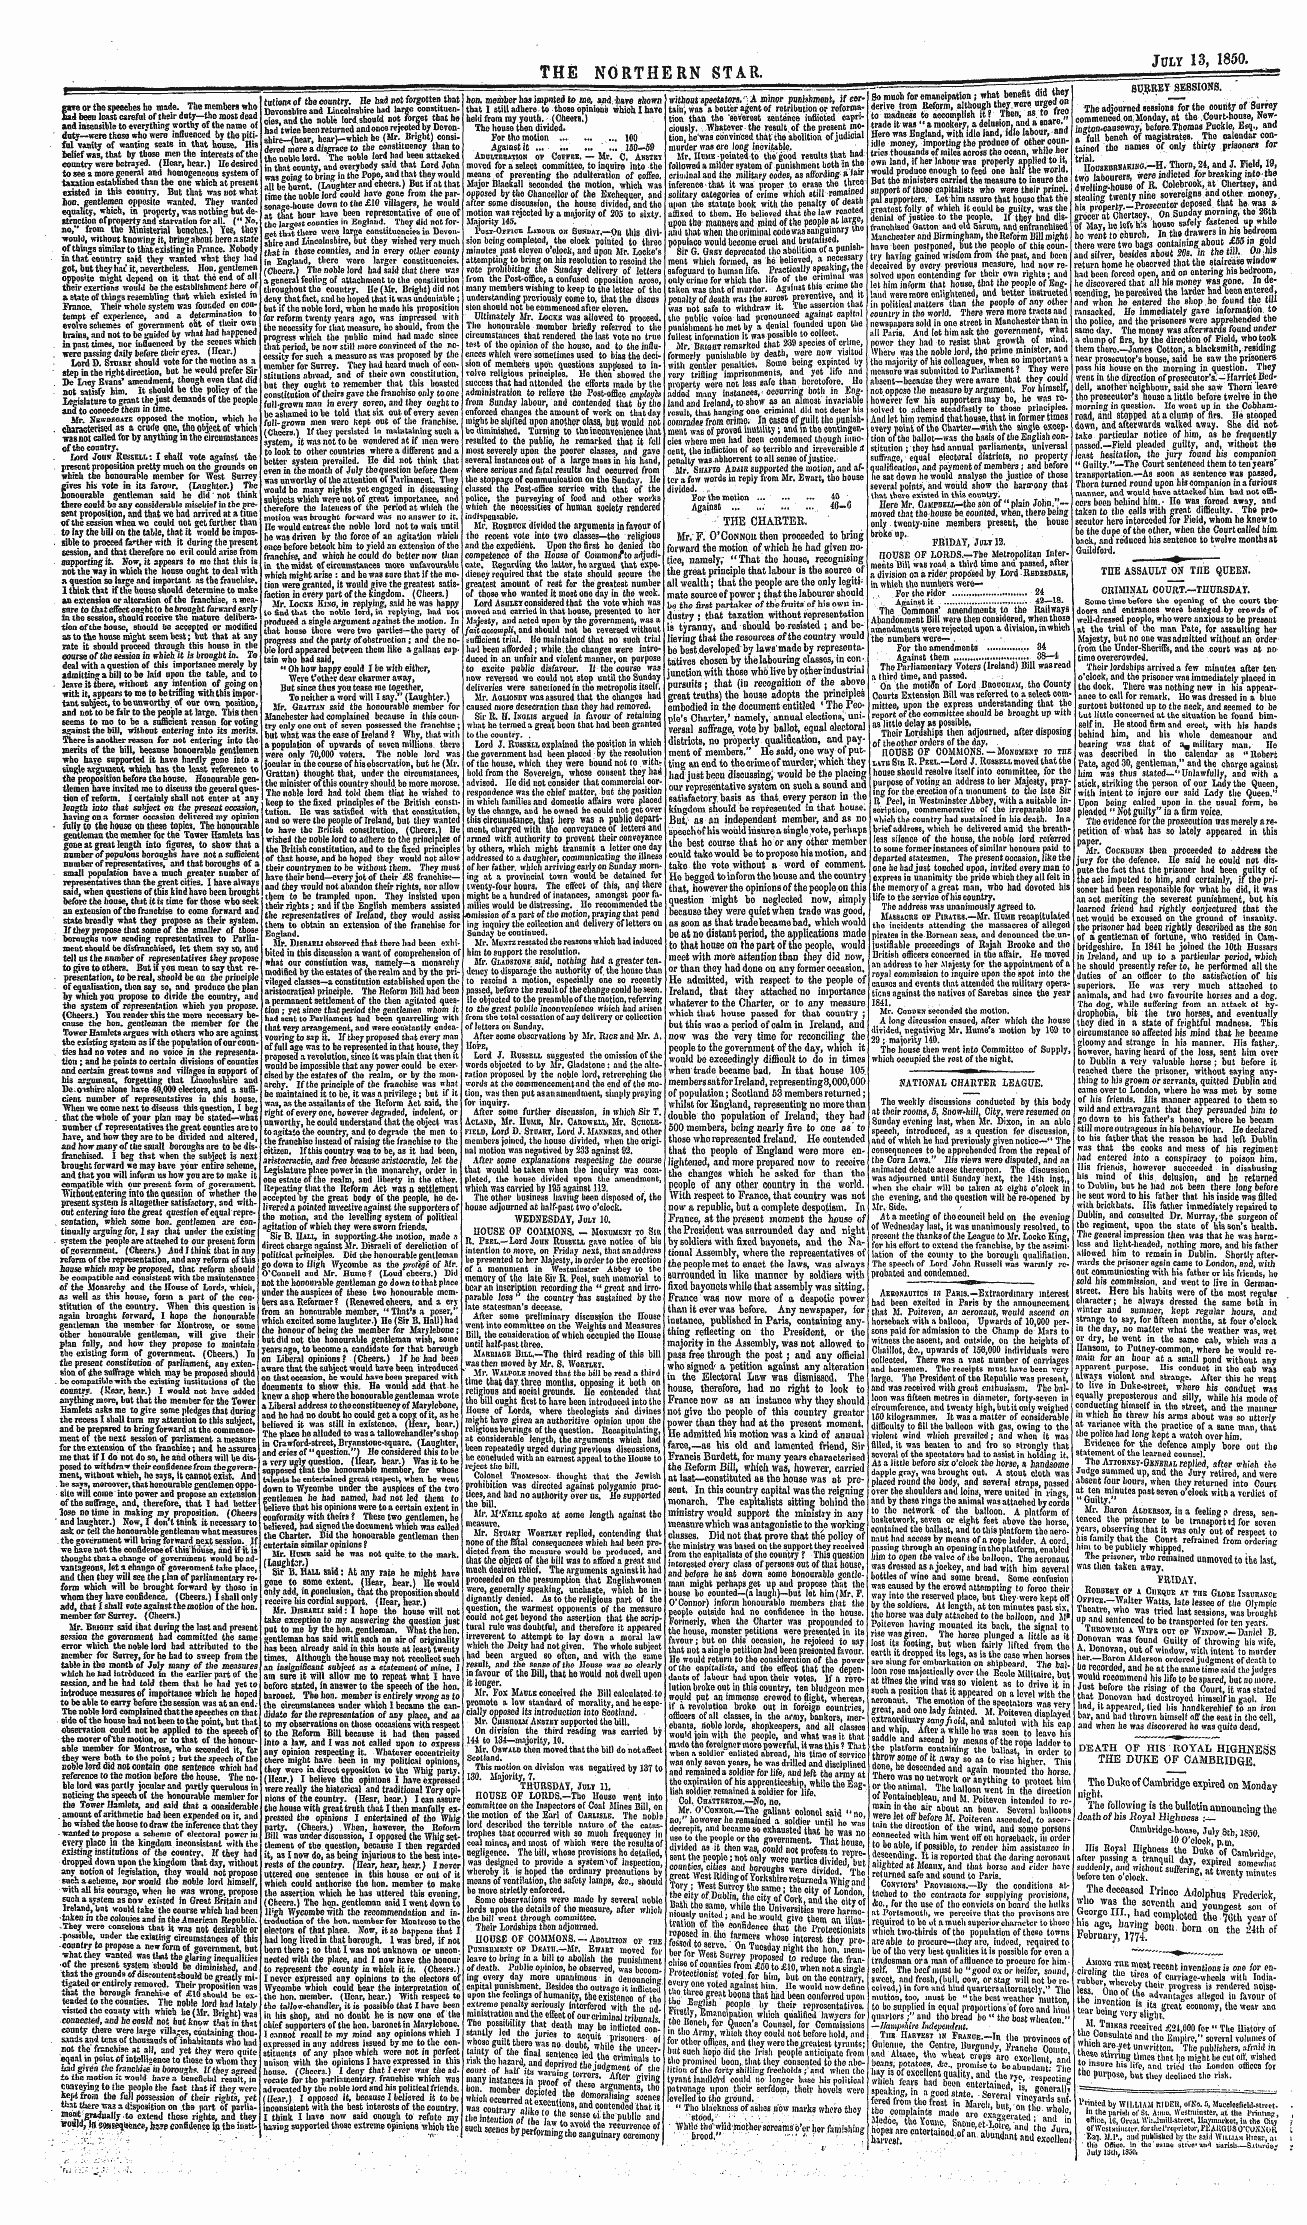 Northern Star (1837-1852): jS F Y, 3rd edition - L'Rinted By William Kideu, Of No. 5, Macelesfield-Street-